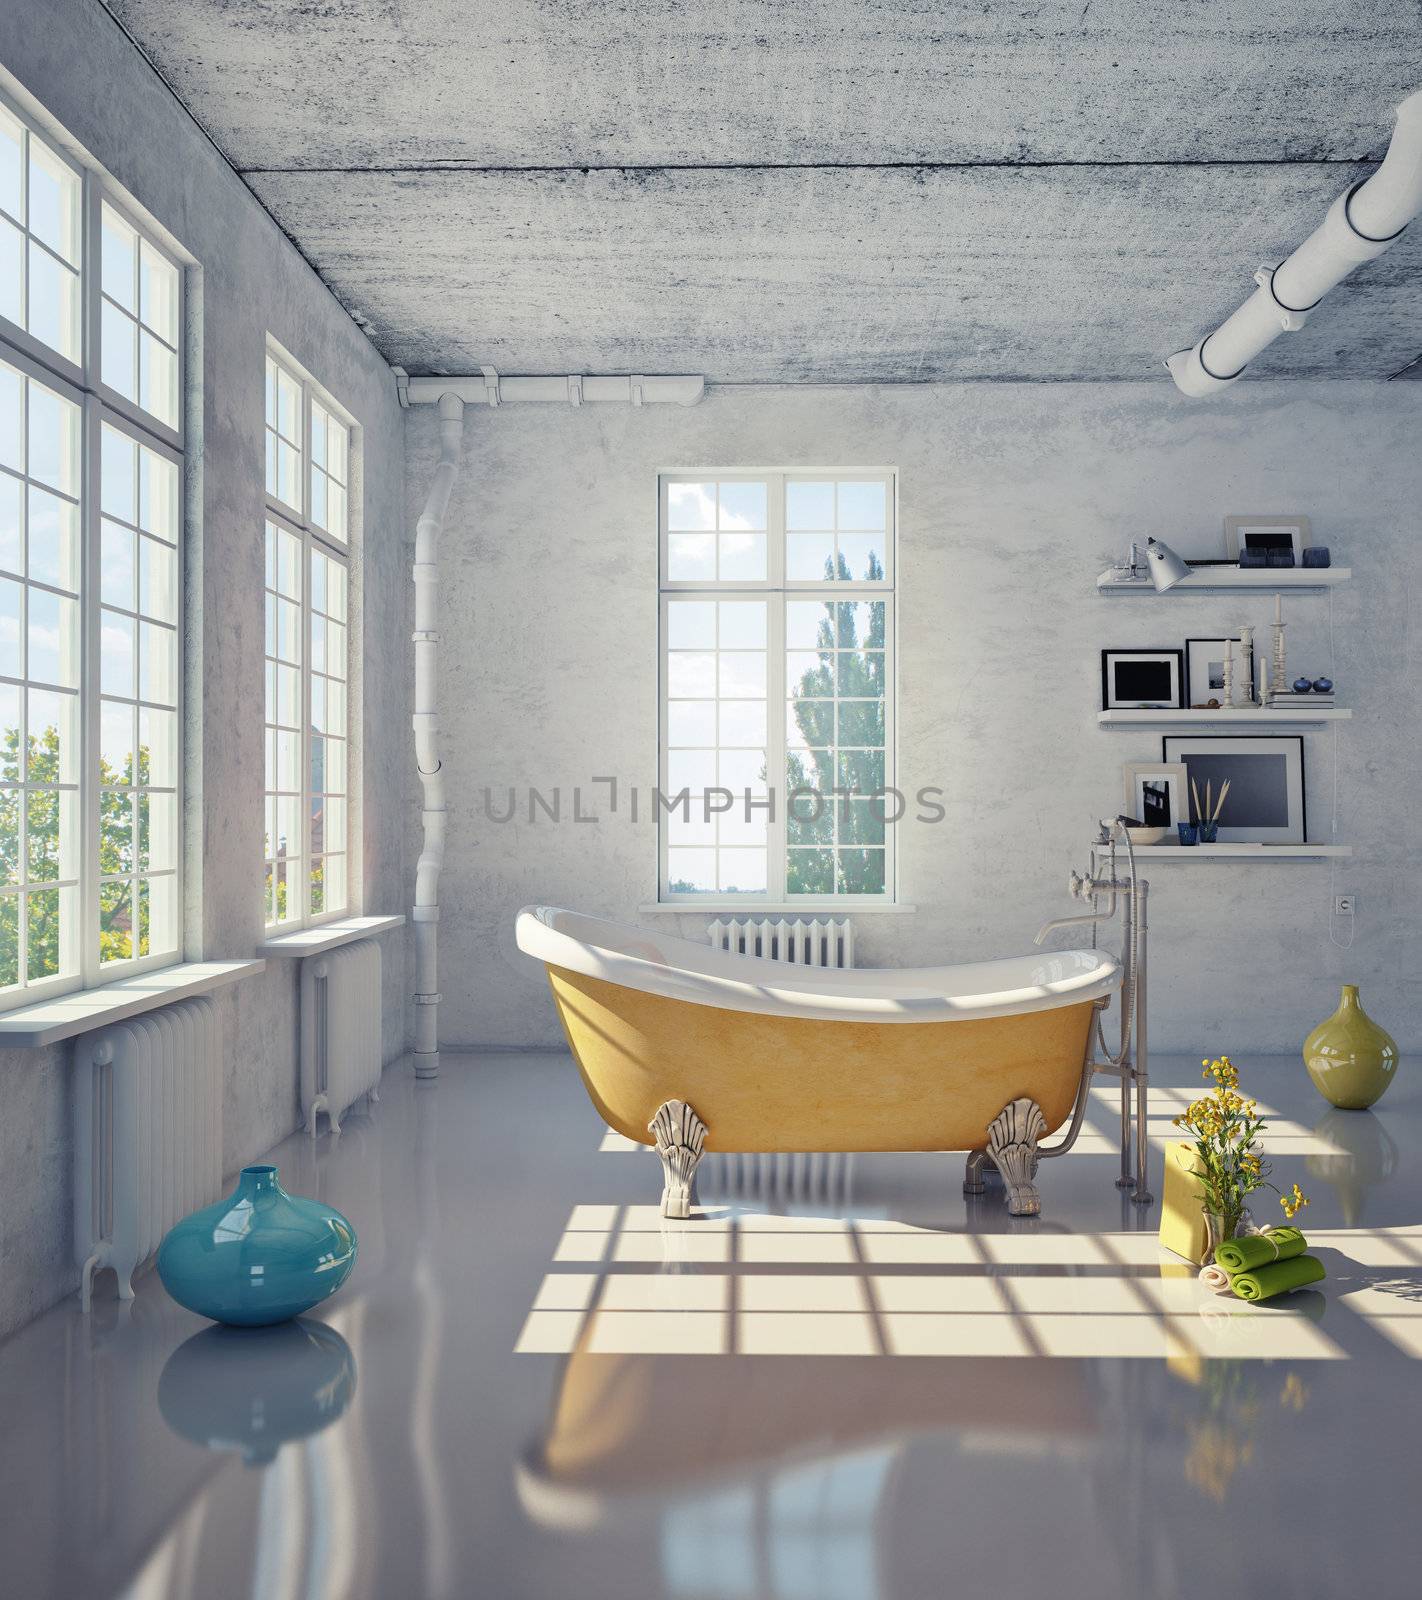 bathtub in the loft interior (illustration) 